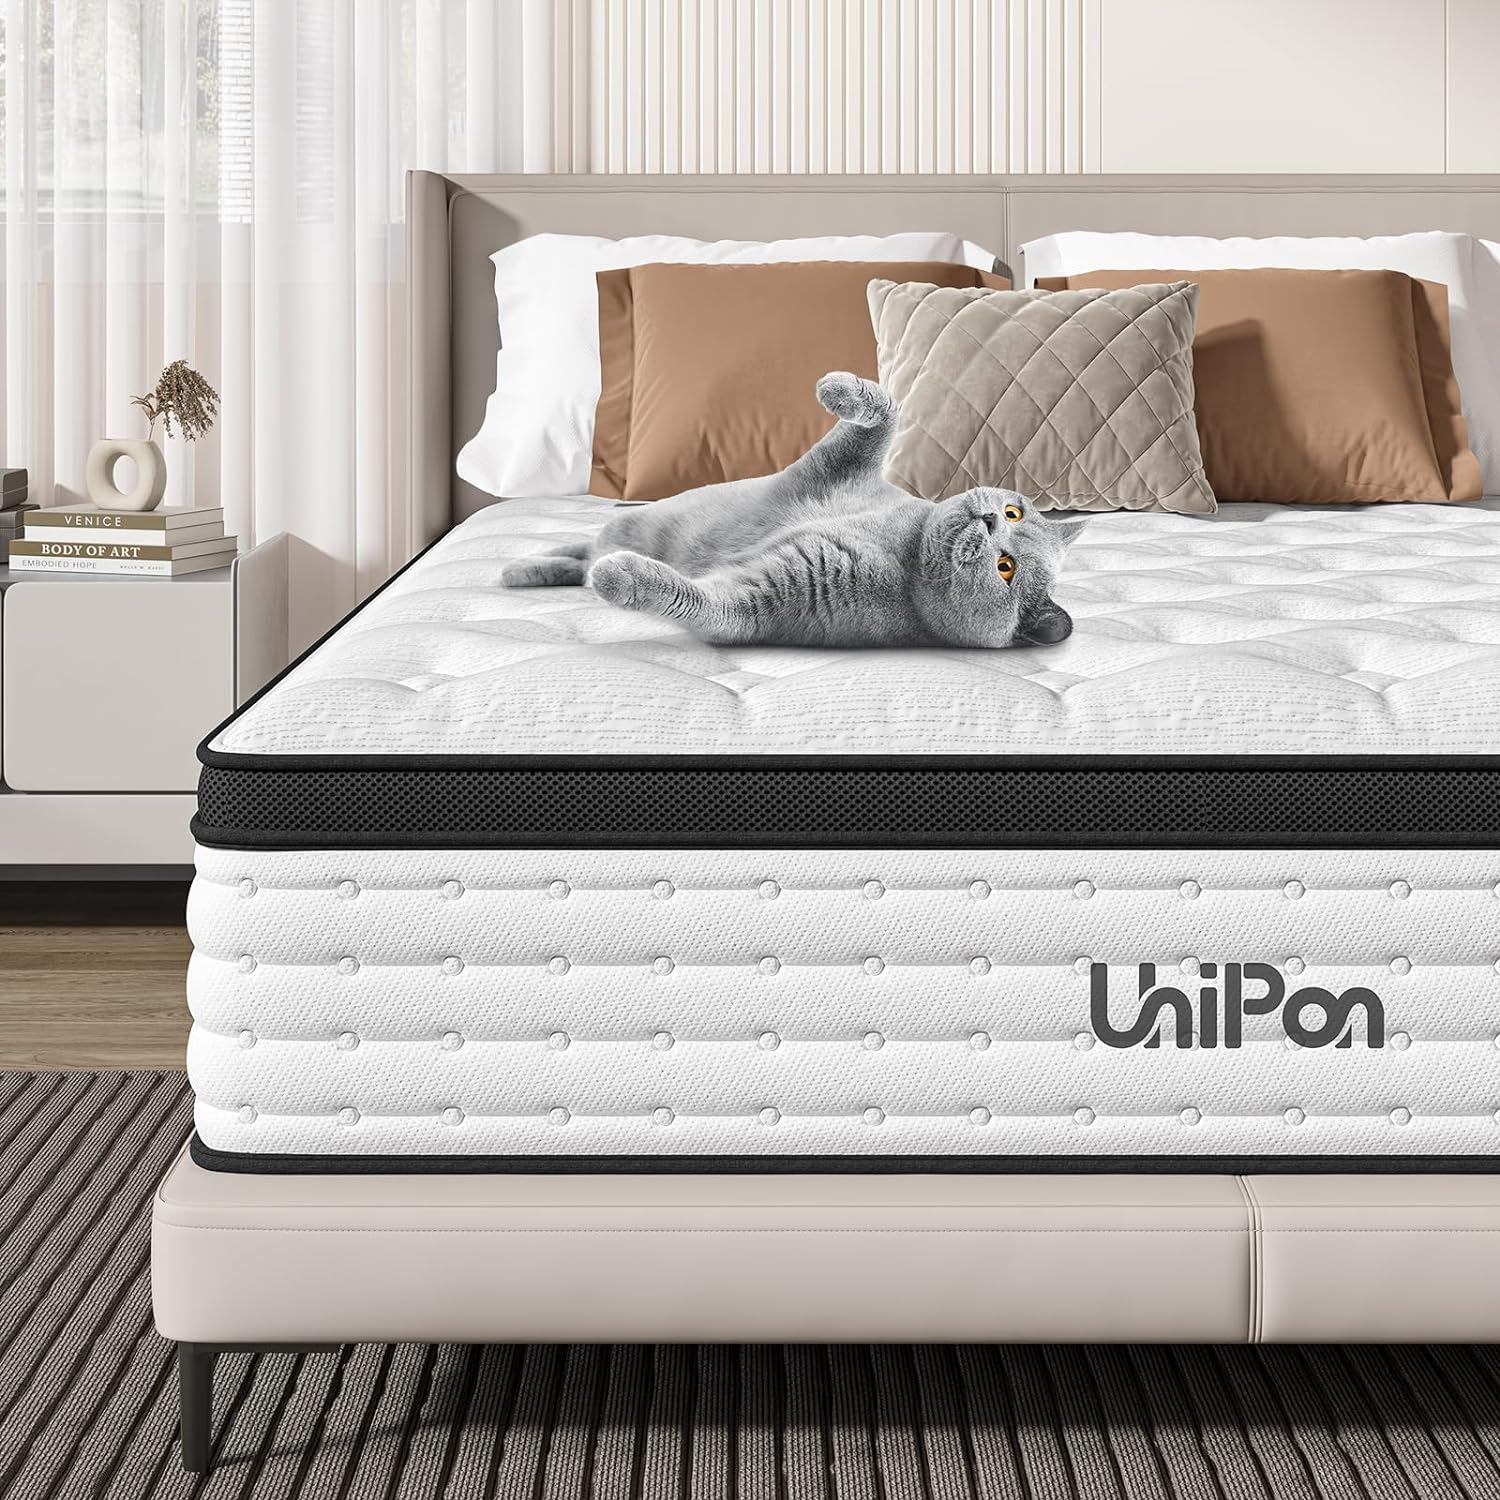 UniPon 14 inches Queen Size Hybrid Mattress, Medium Firm Mattress with Gel Memory Foam, Pocket Spring Mattress in a Box, 60 * 80 inches